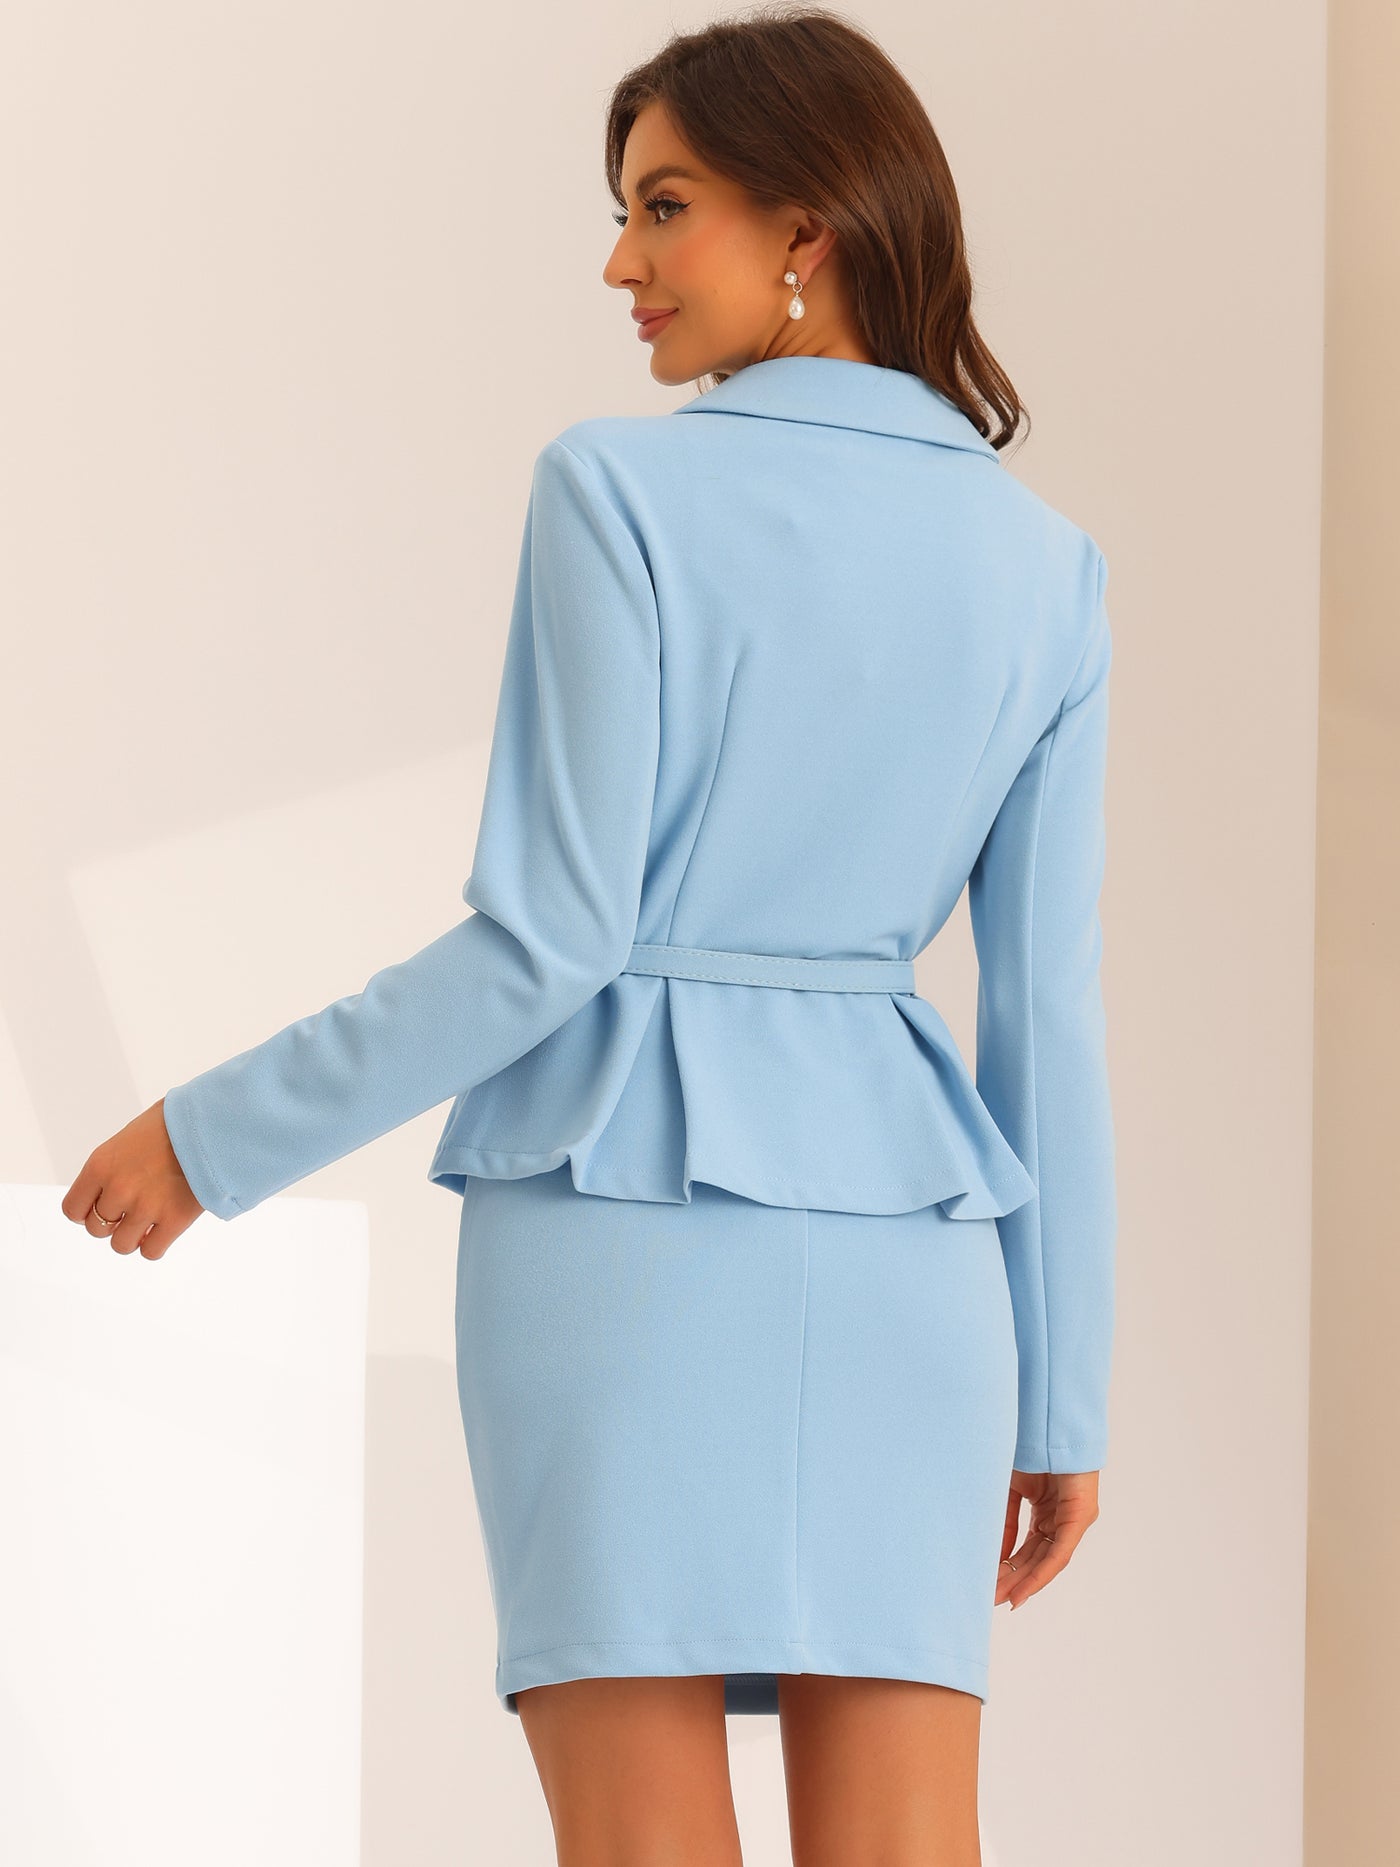 Allegra K 2pc Business Suits Belted Peplum Blazer Jacket and Pencil Skirt Sets